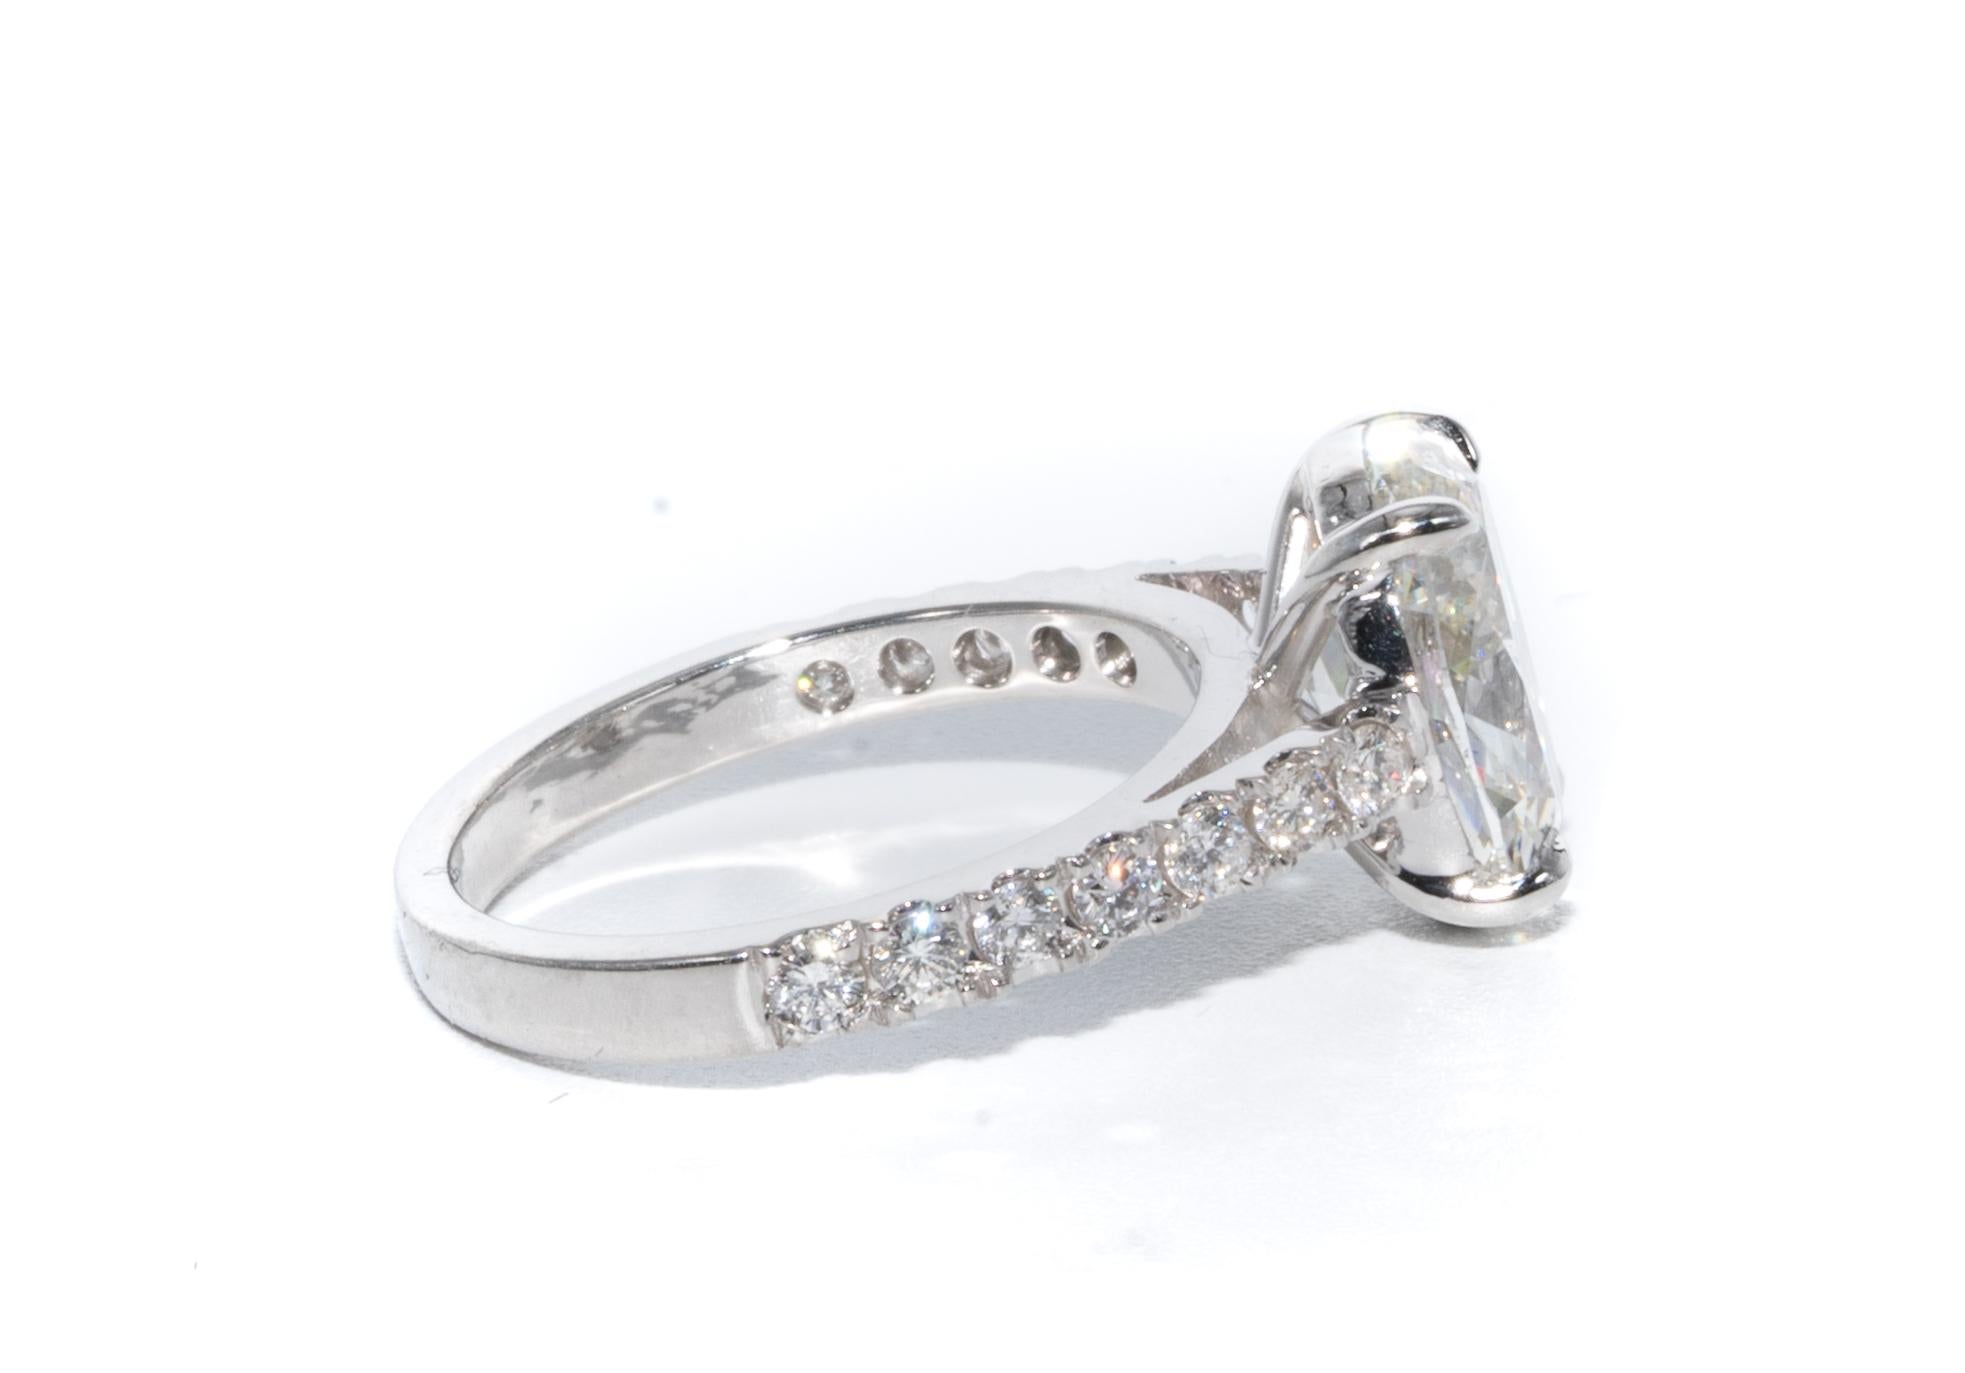 Contemporary 3.01 Carat Oval Cut Diamond Engagement Ring, in 18 Karat